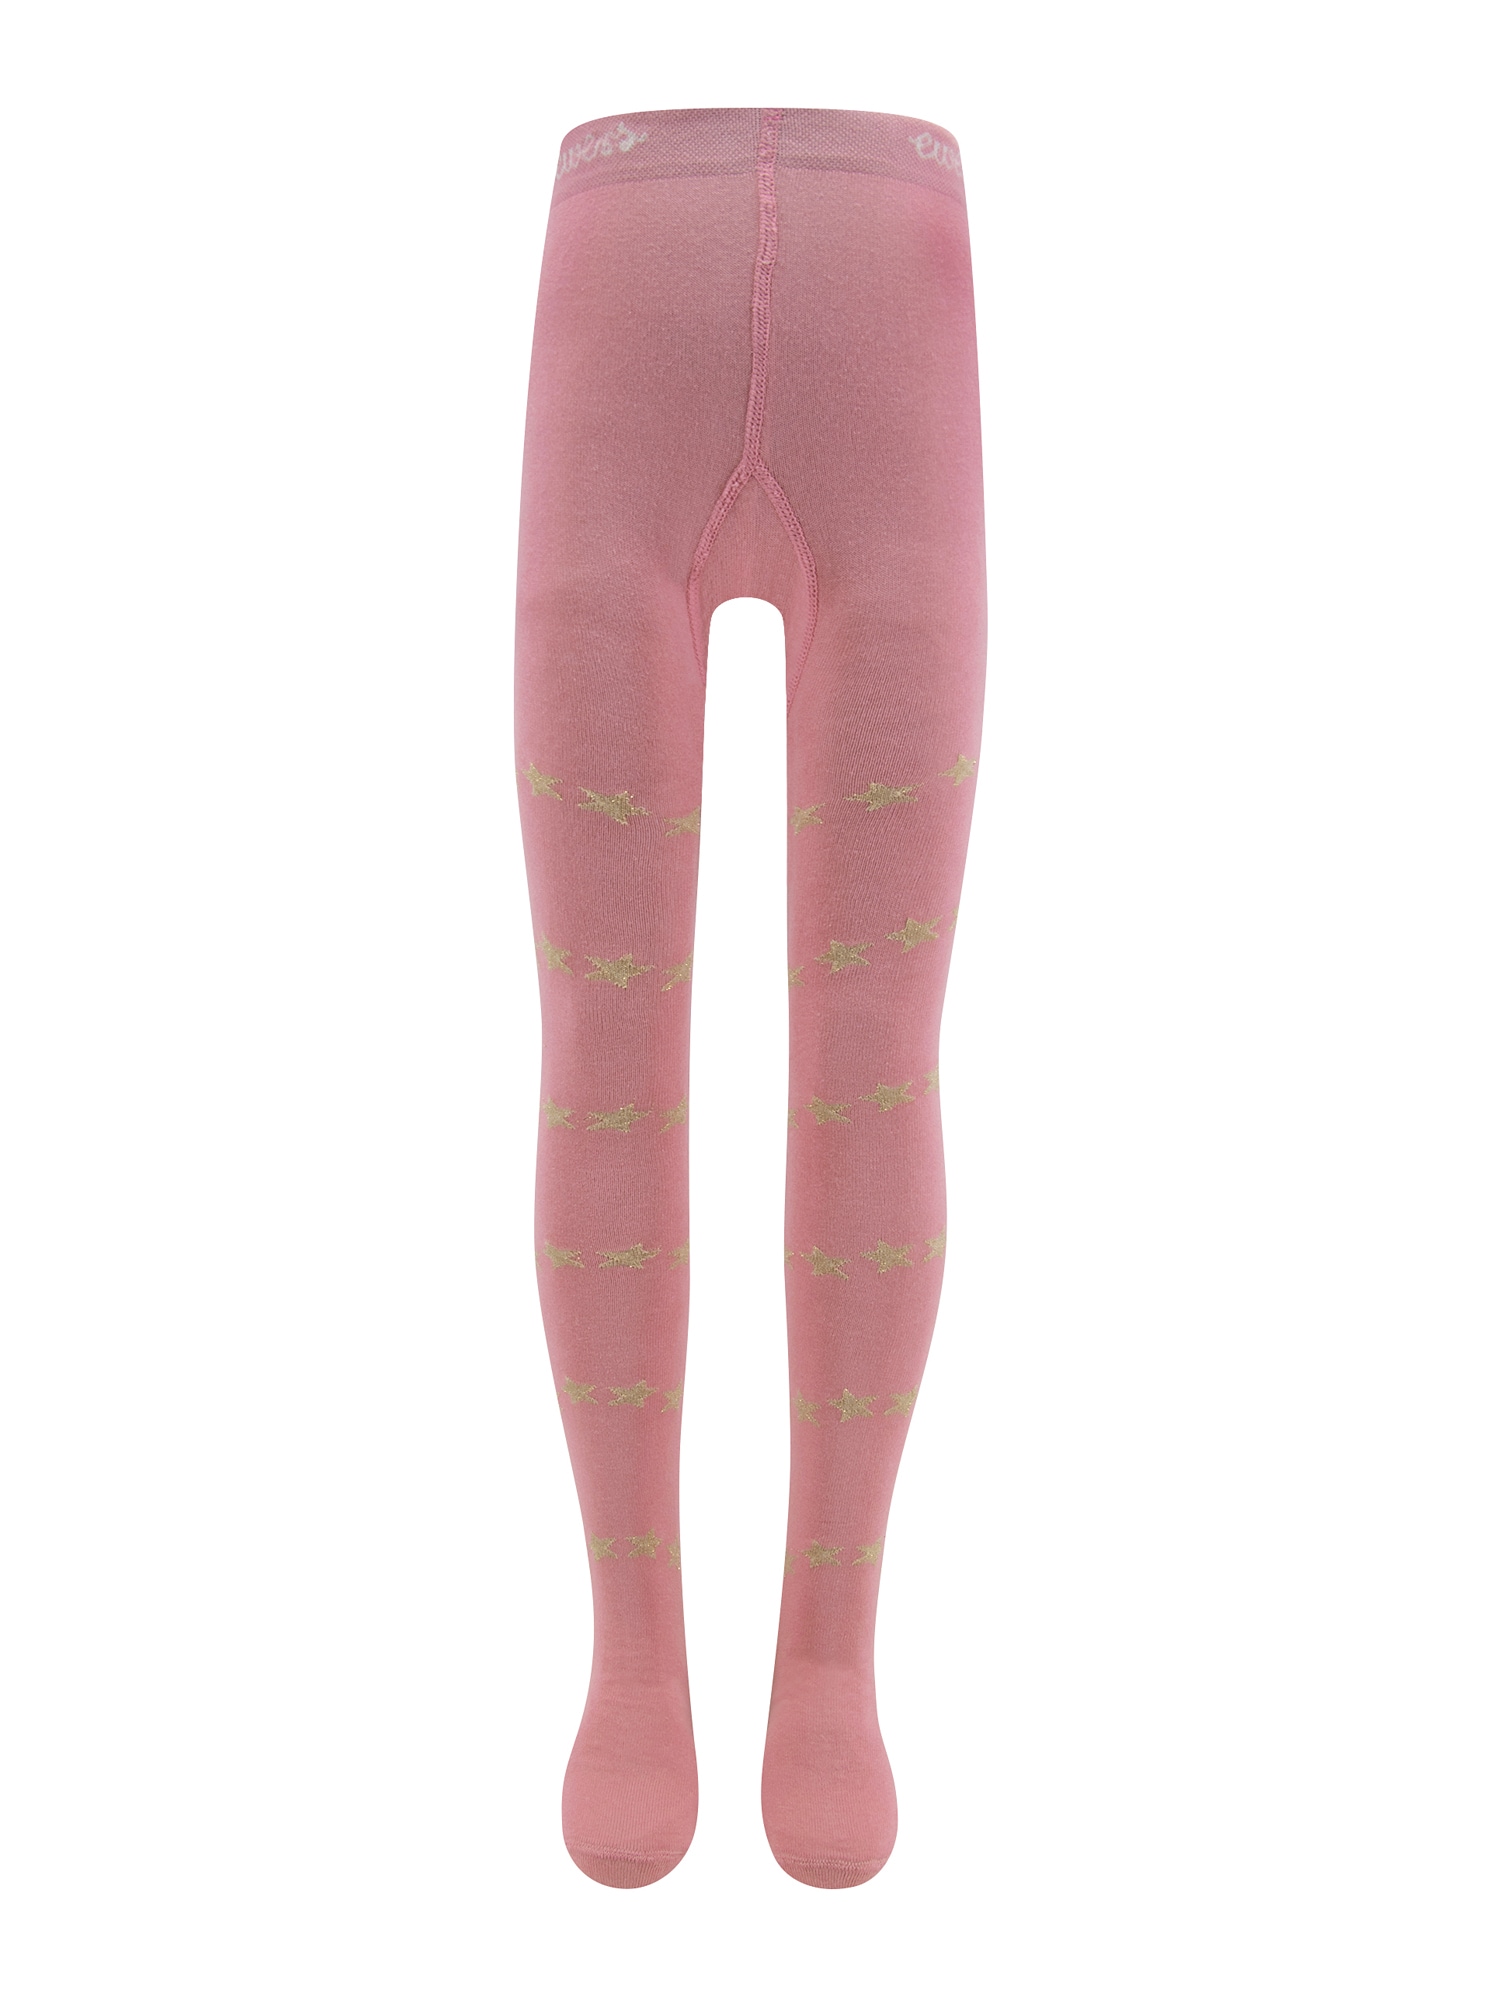 EWERS Hlačne nogavice 'Sterne'  zlata / svetlo roza